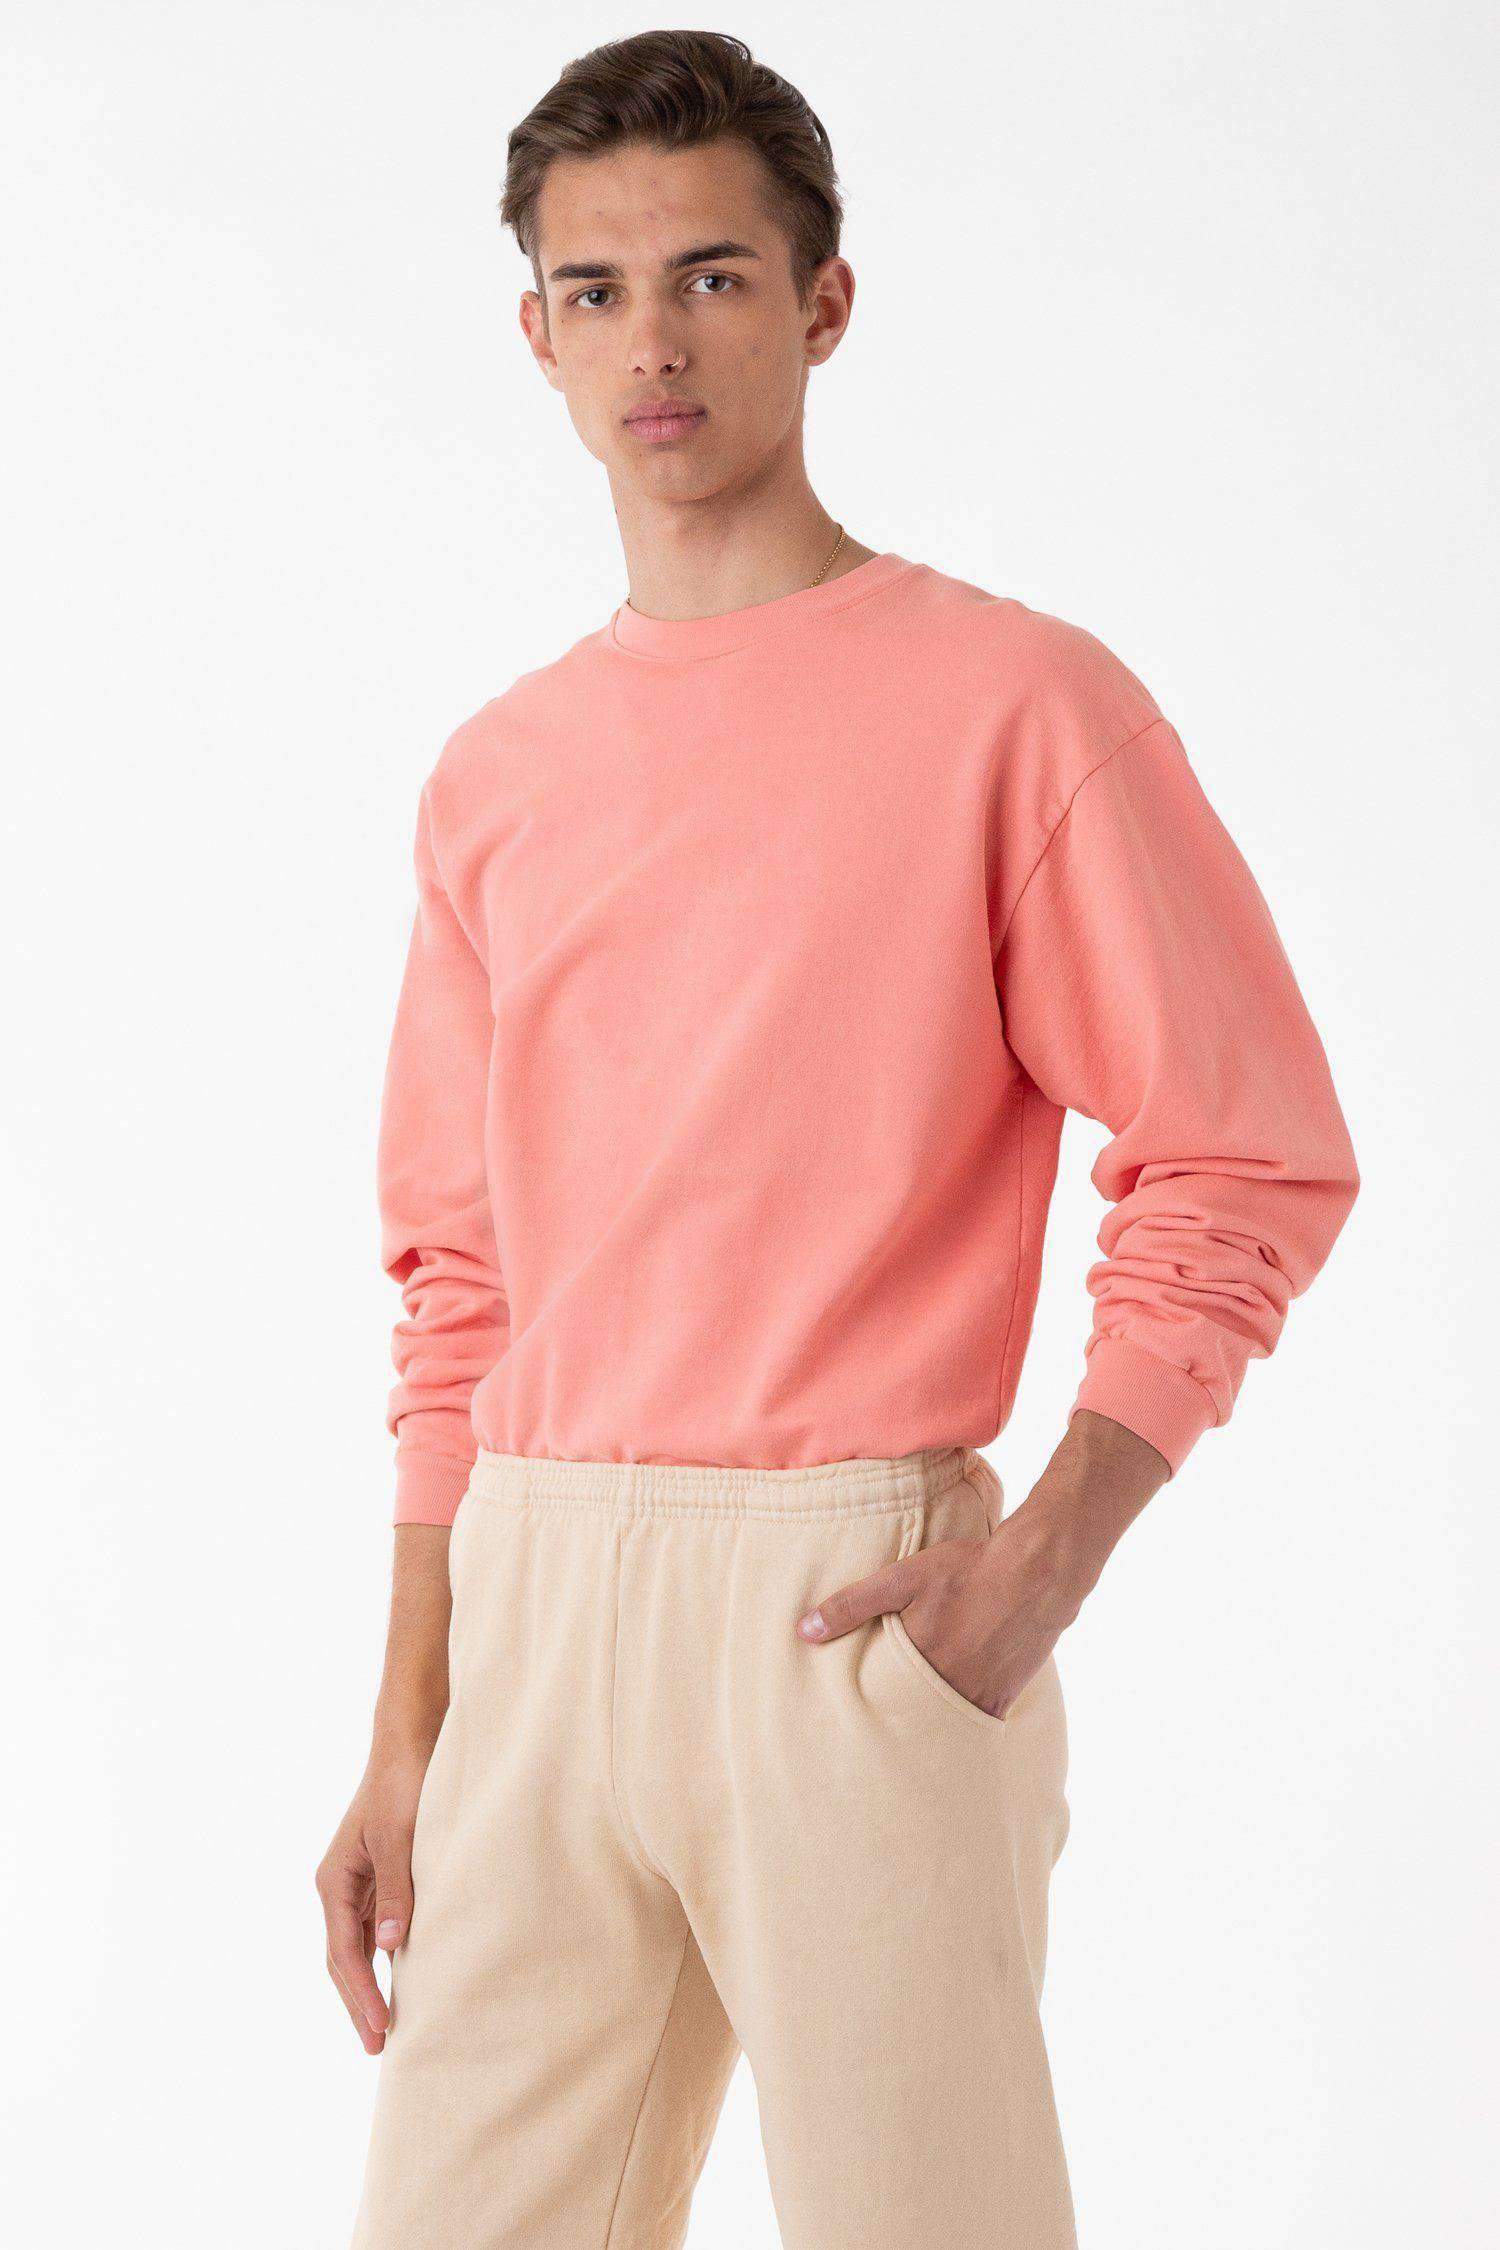 MWT07GD - Long Sleeve Garment Dye French Terry Pullover Sweatshirt Los Angeles Apparel Salmon XS 